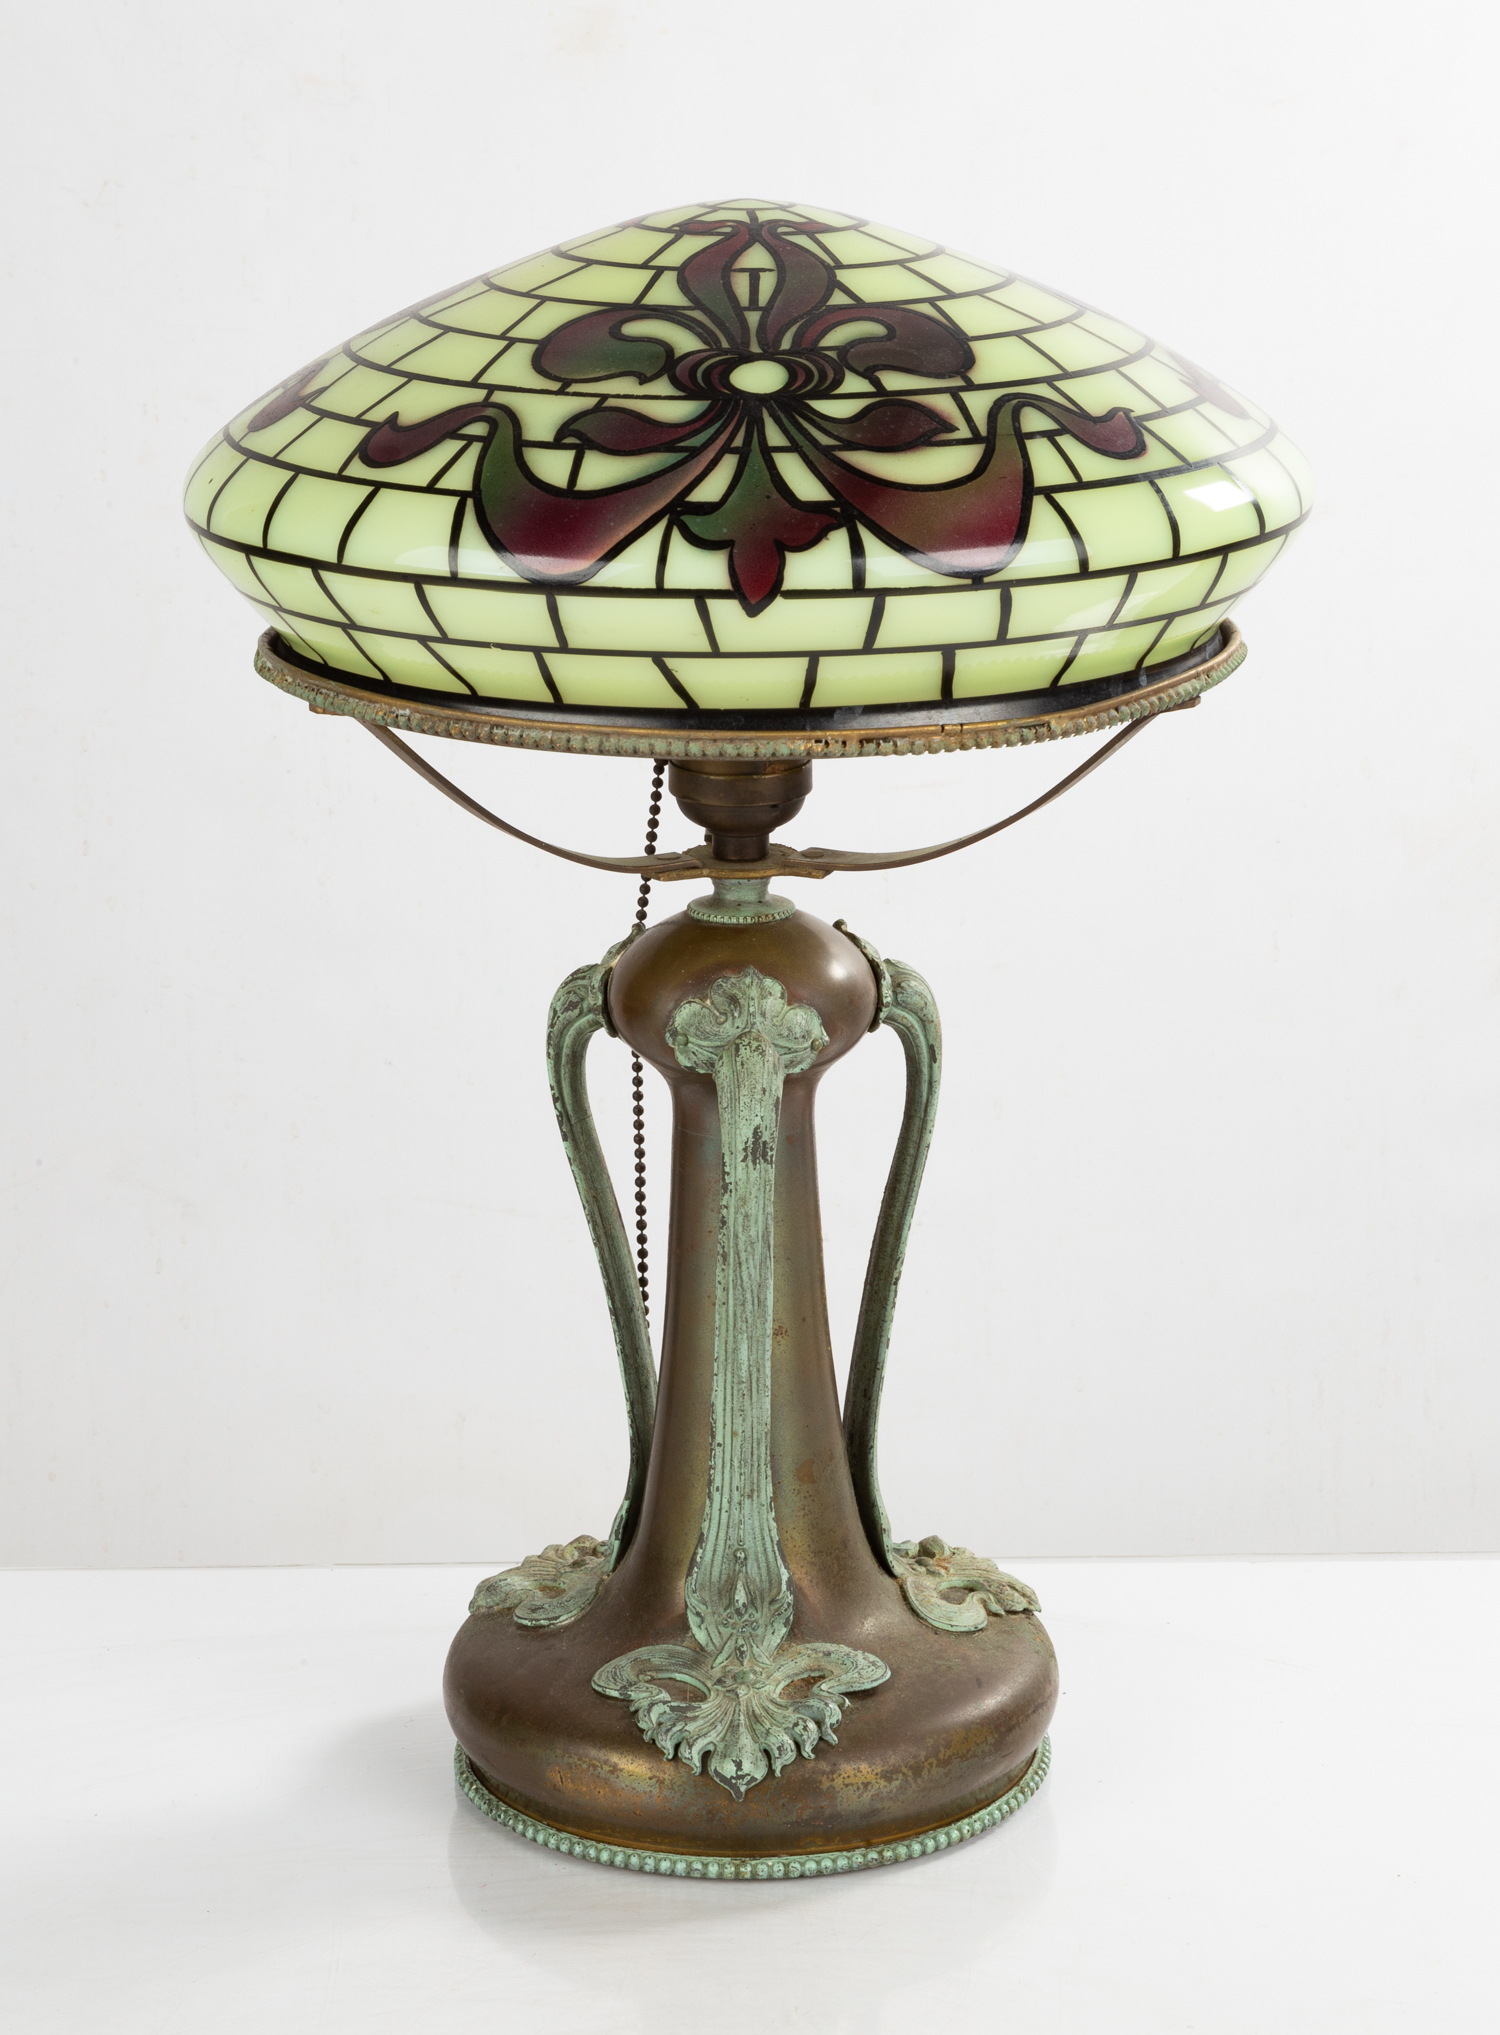 BRADLEY & HUBBARD TABLE LAMP Early 20th